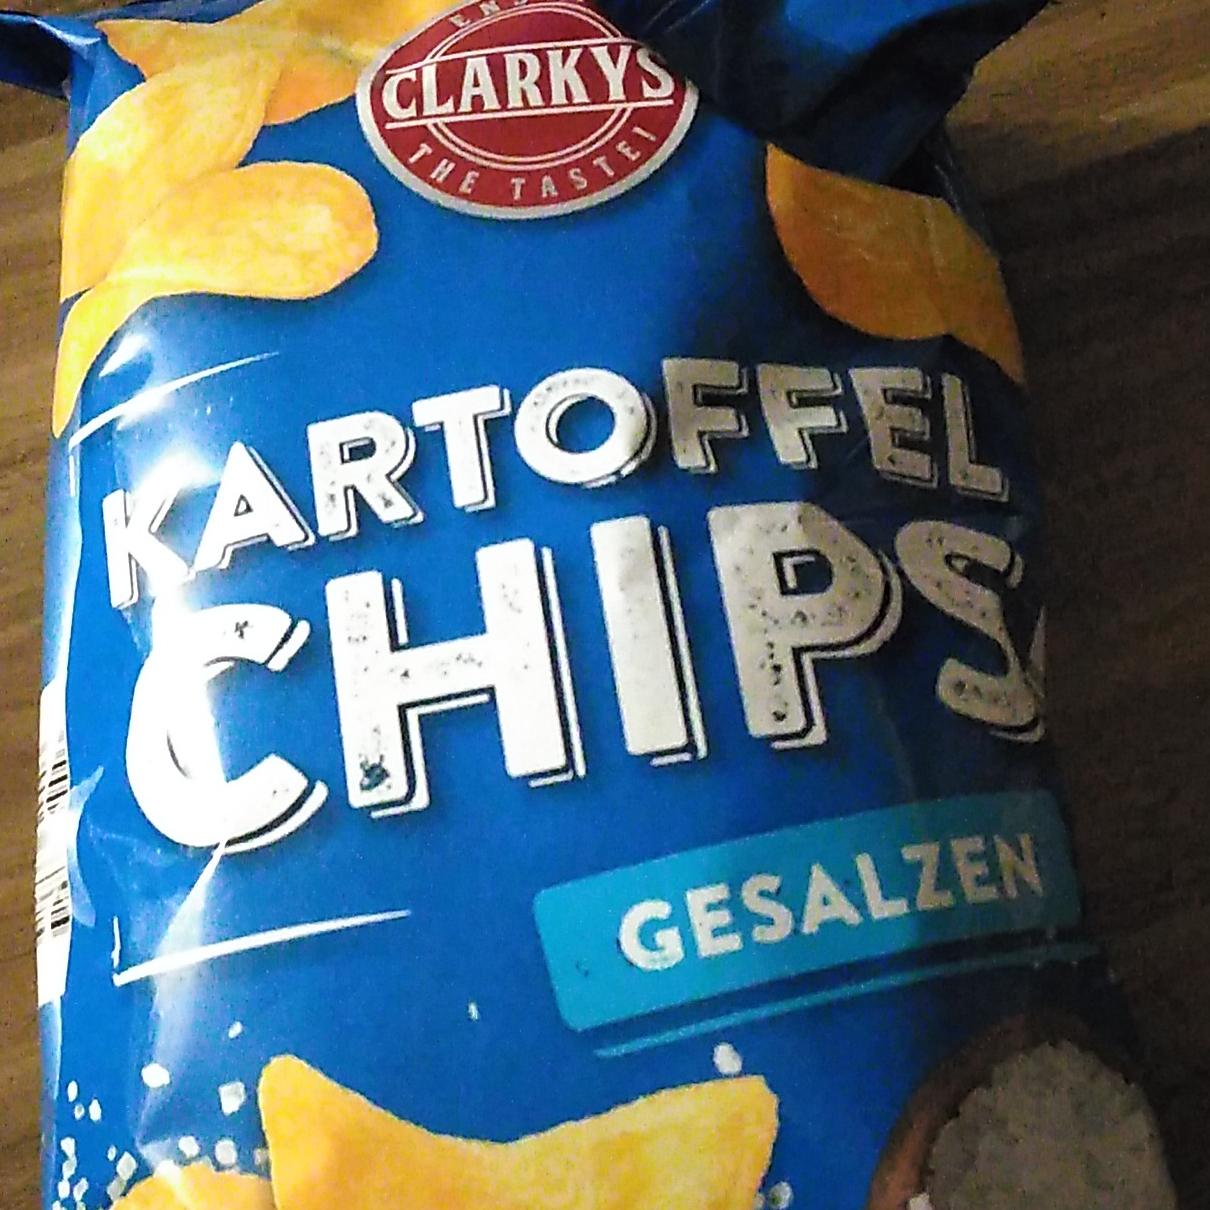 Fotografie - Kartoffel Chips gesalzen Clarkys